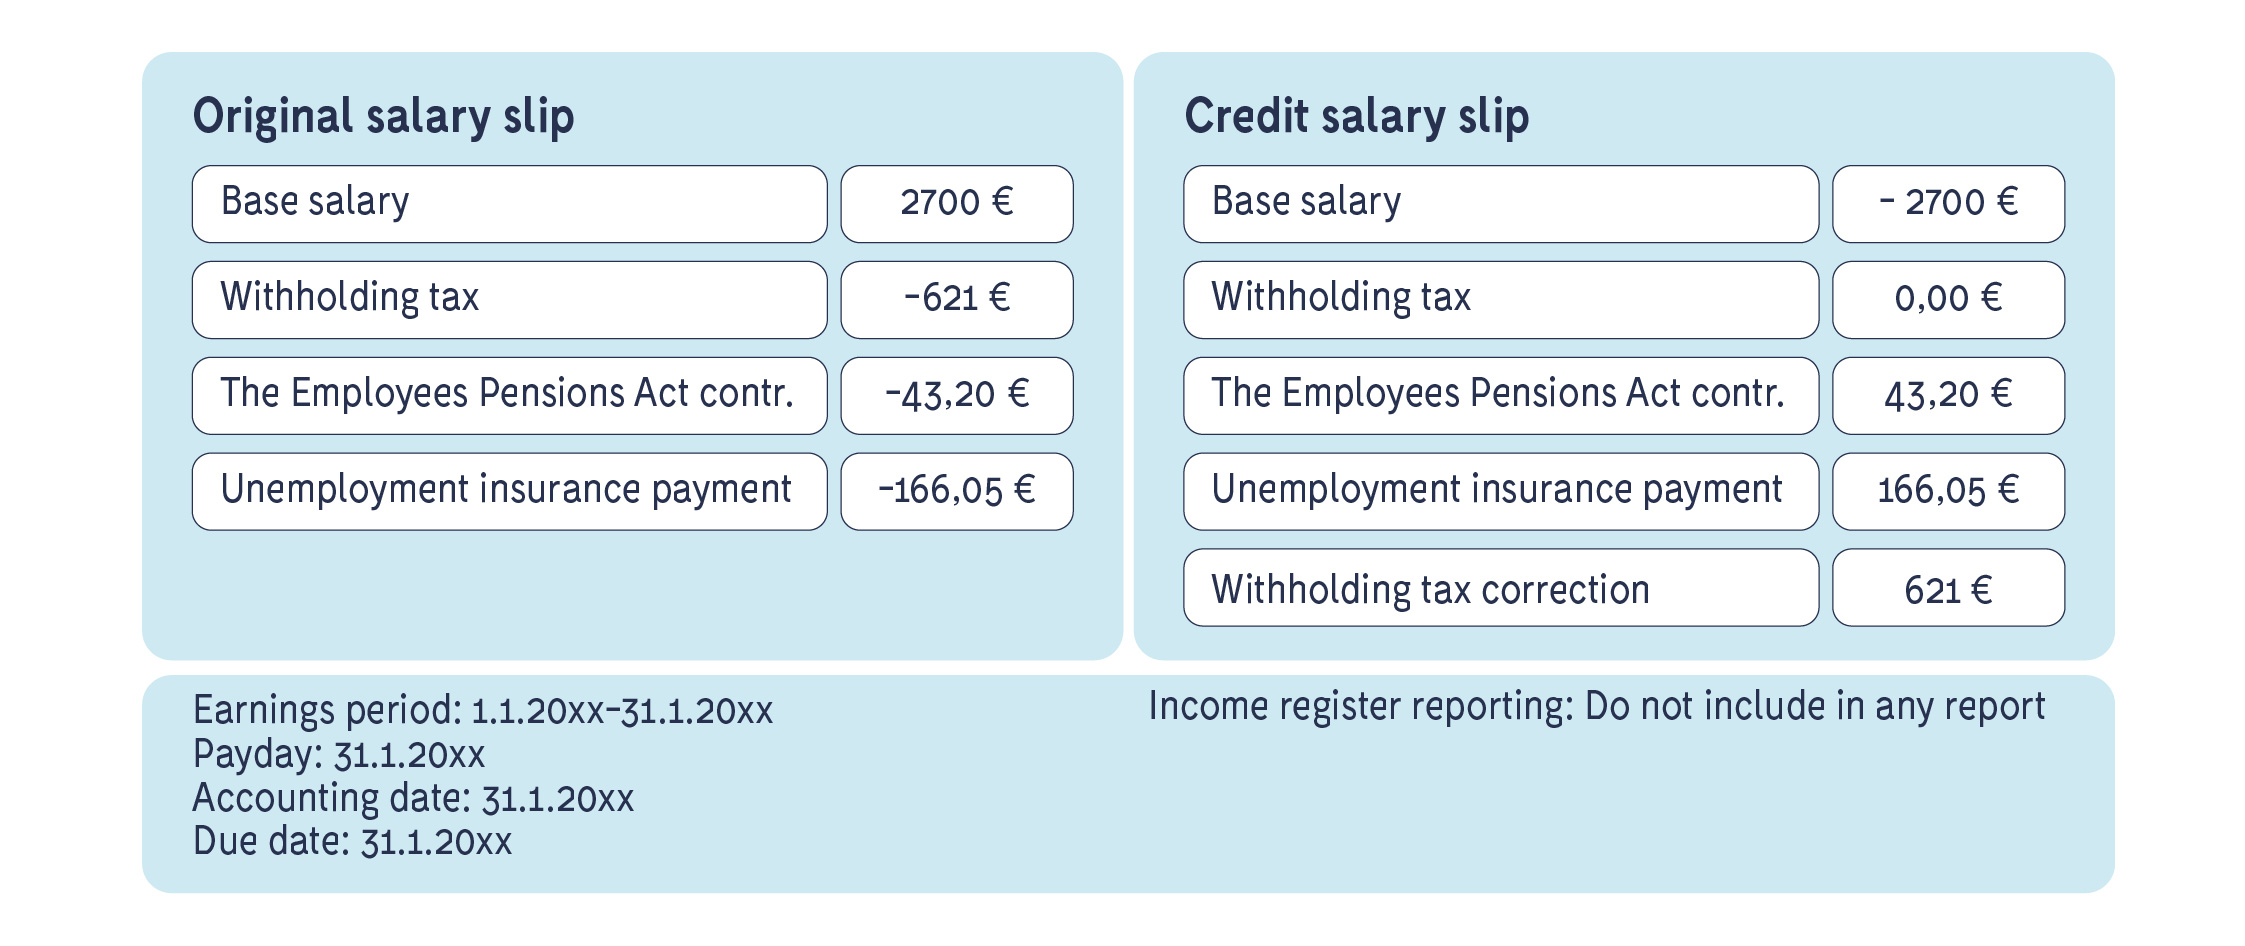 credit_salary_slip_en_salary_slip.jpg